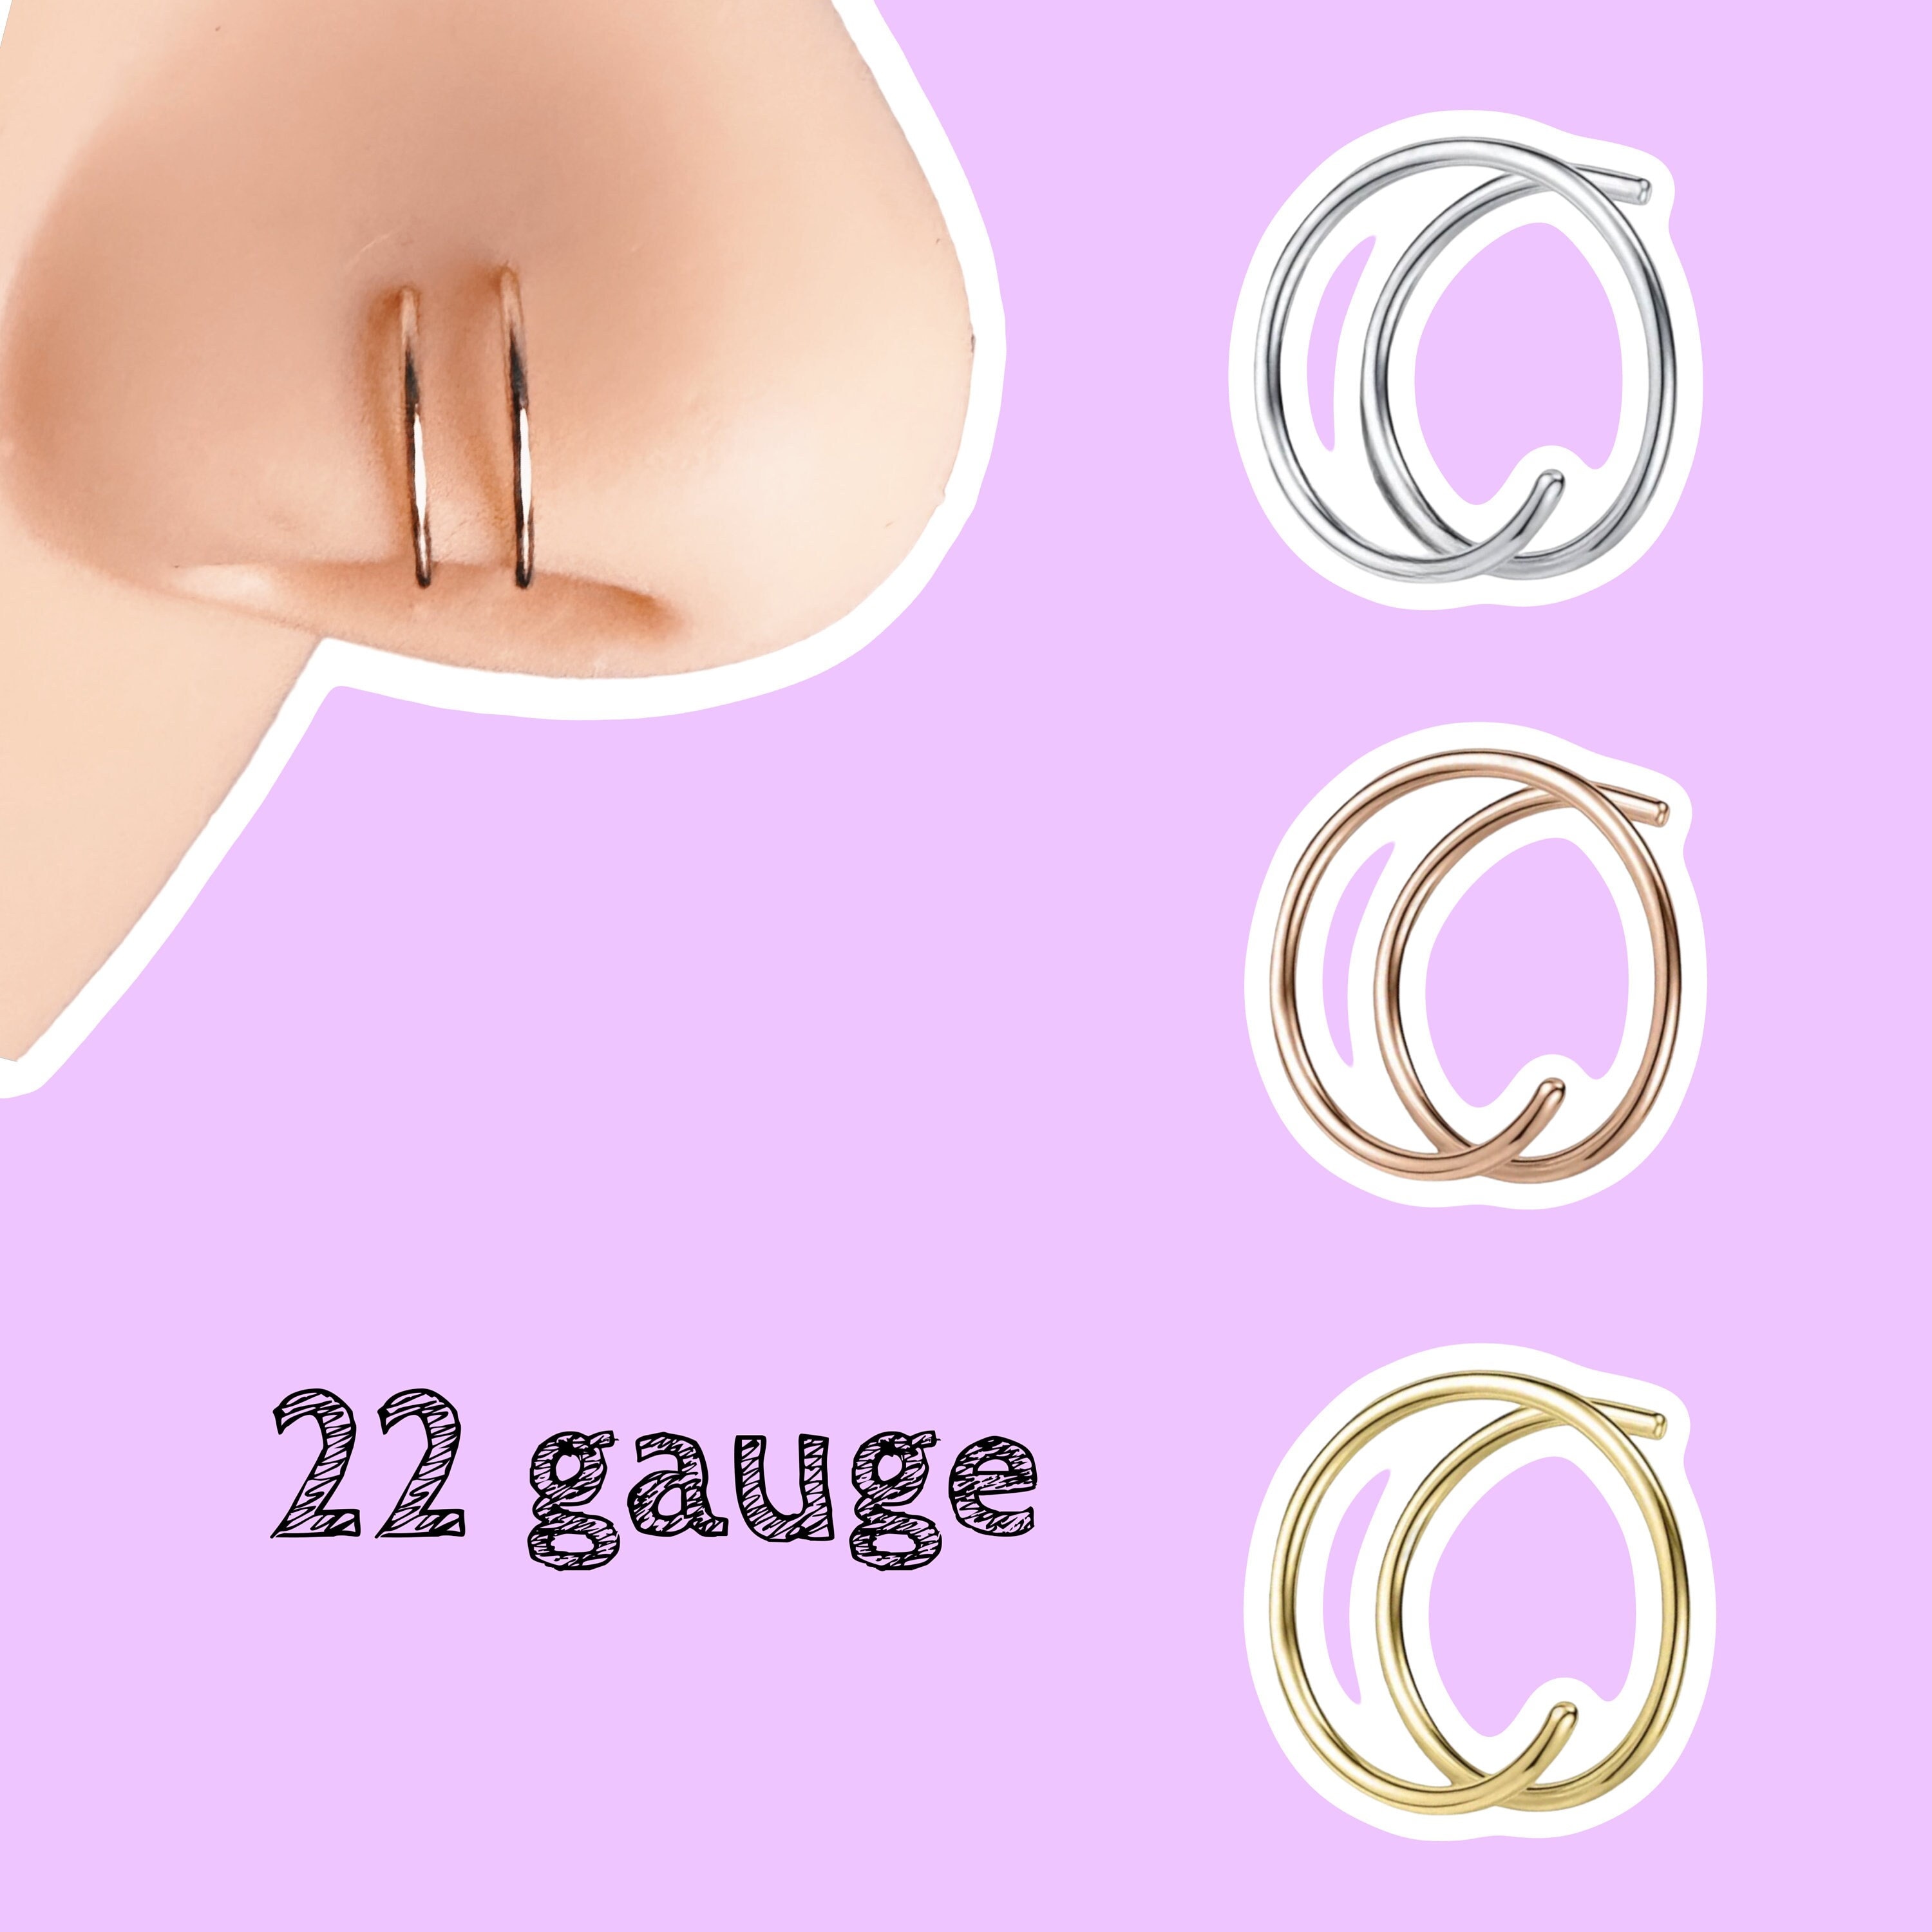 22g Double Hoop Nose Ring for Single Piercing 22 Gauge Sterling